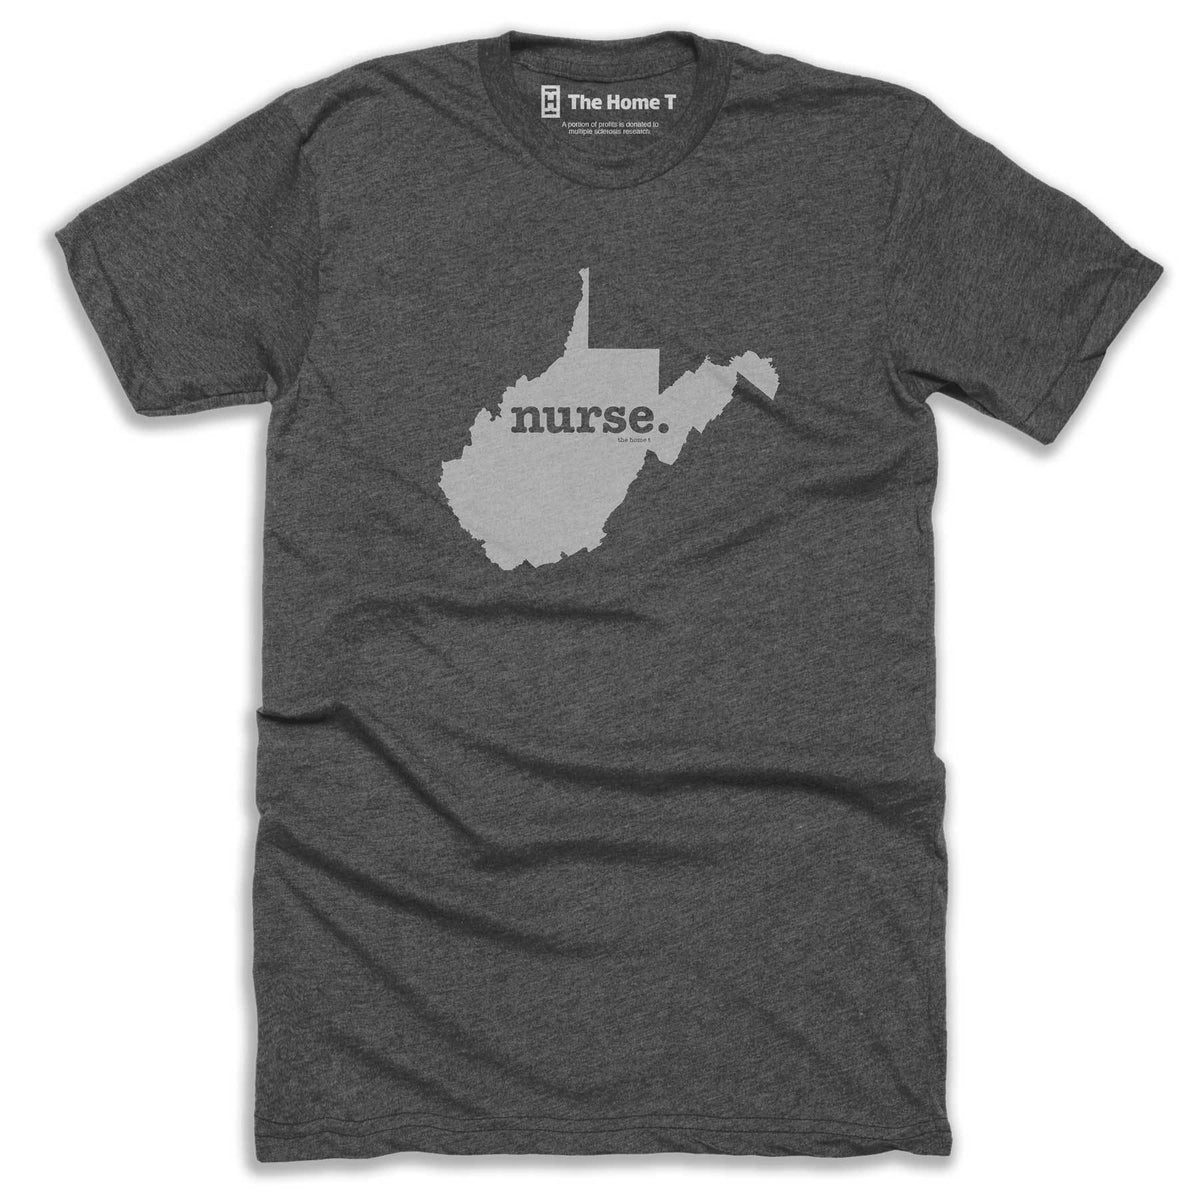 West Virginia Nurse Home T-Shirt